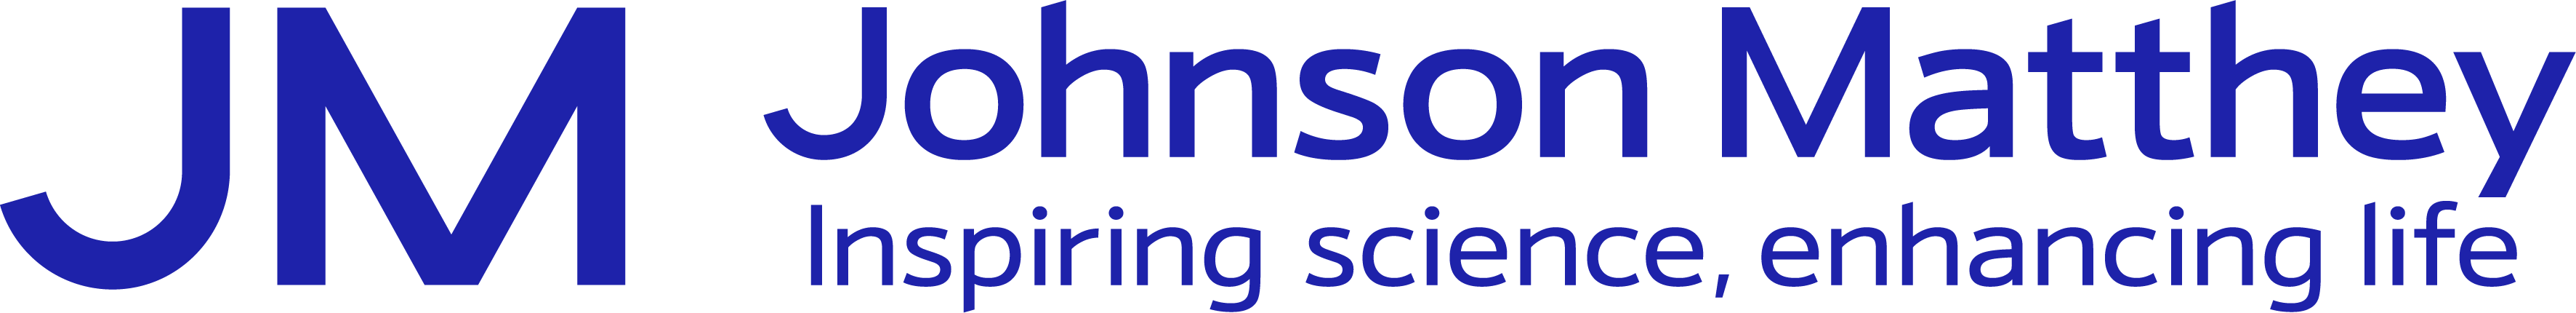 Johnson-Matthey logo